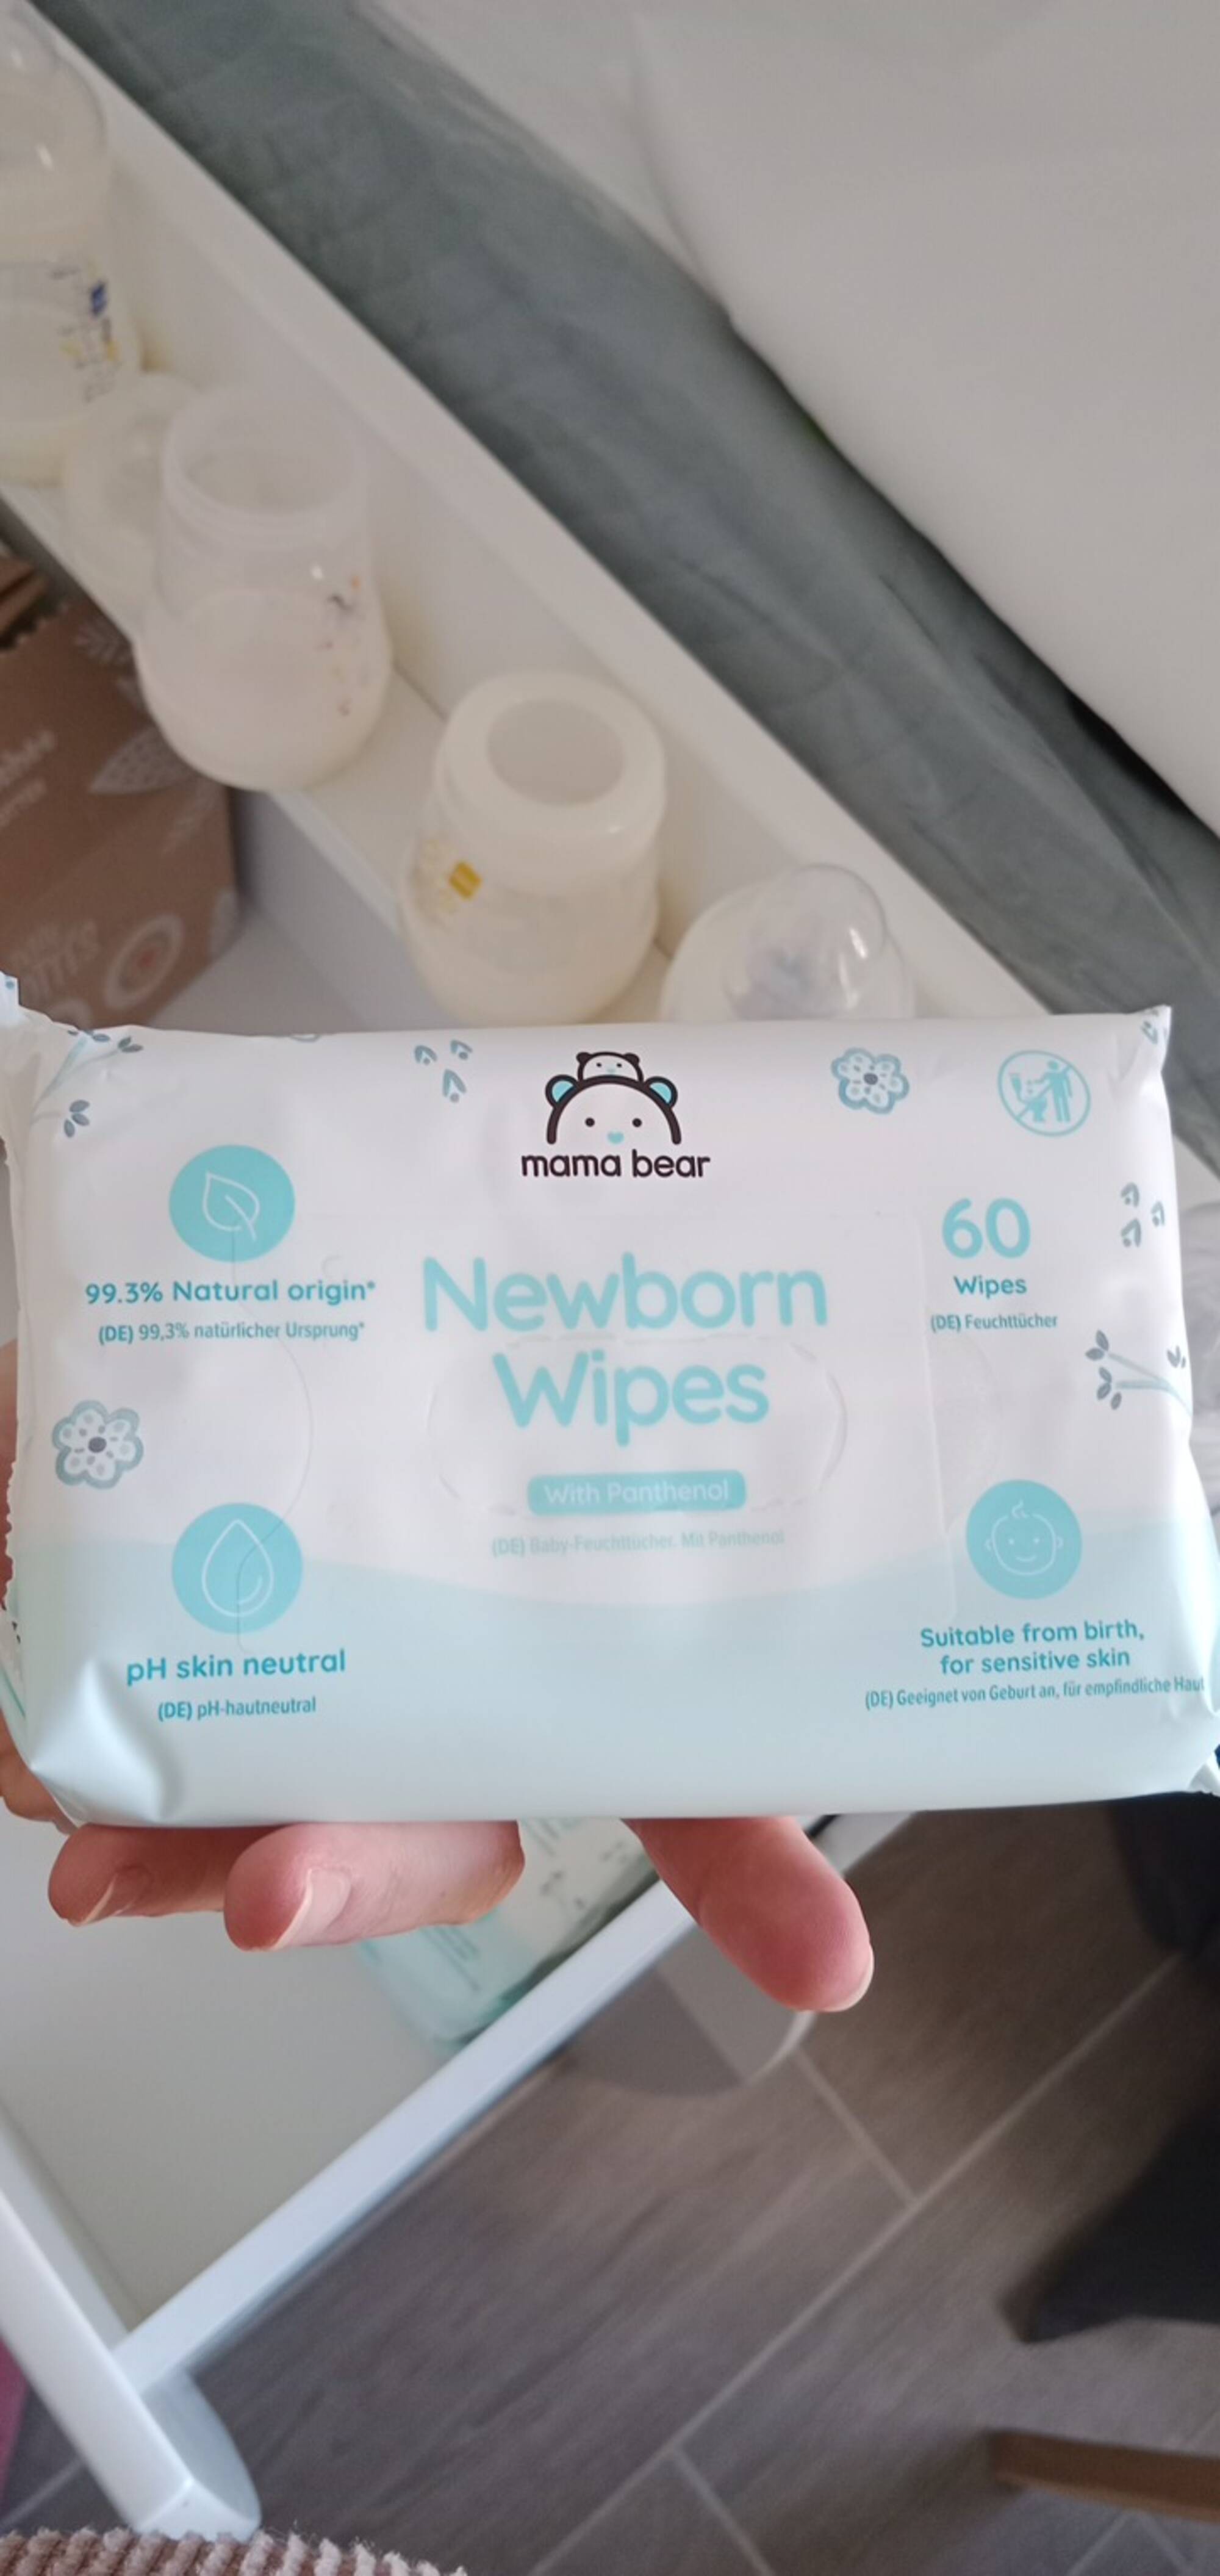 MAMA BEAR - Newborn wipes with panthenol 